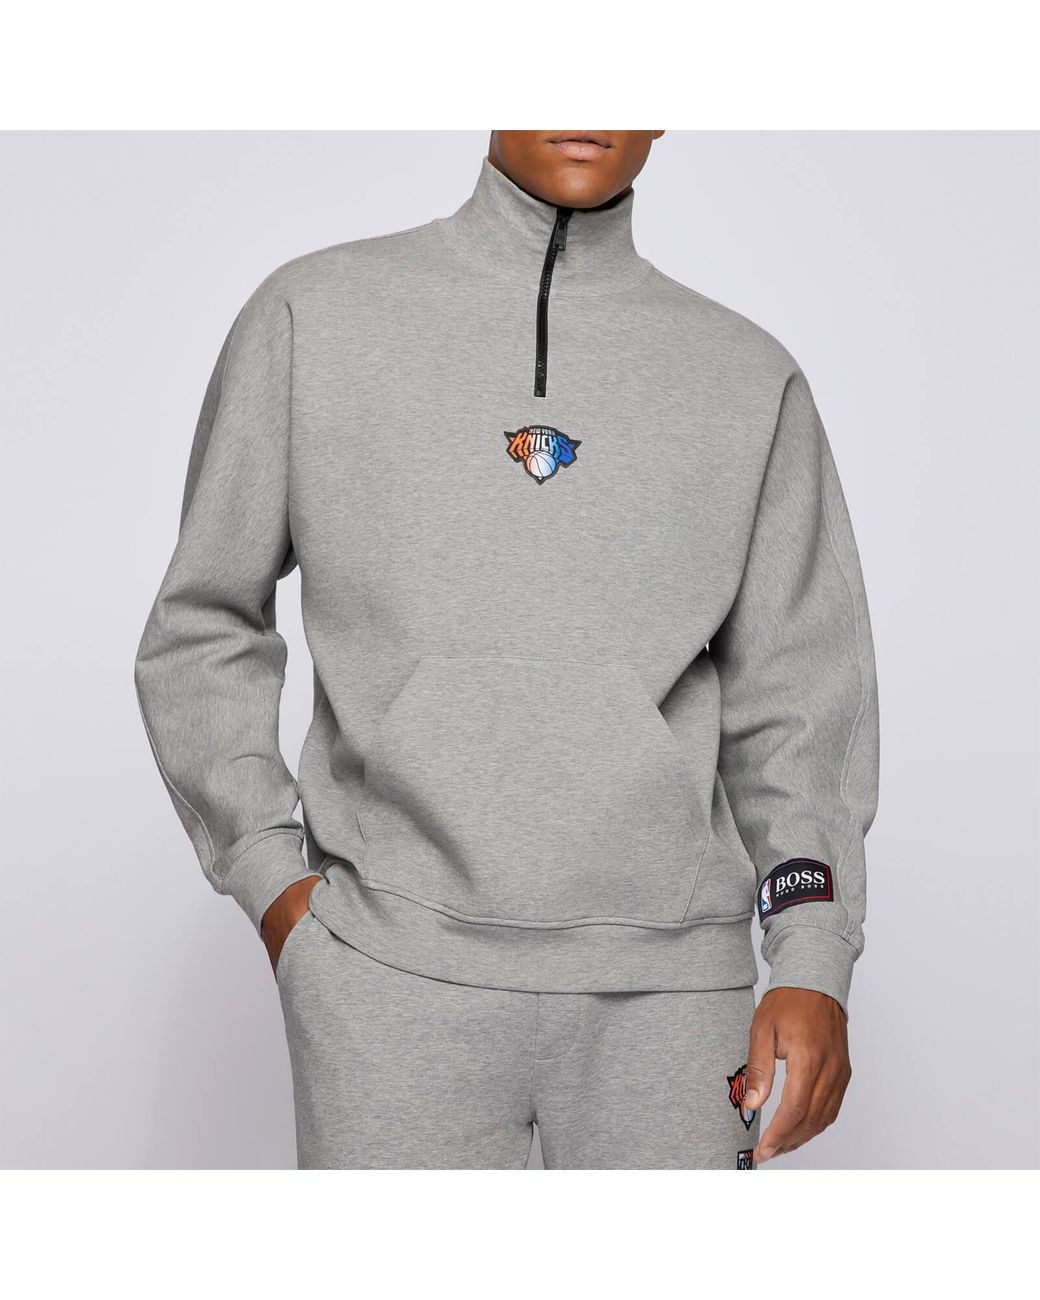 BOSS by HUGO BOSS Cotton X Nba Knicks Quarter Zip Sweatshirt in Grey (Gray)  for Men - Lyst